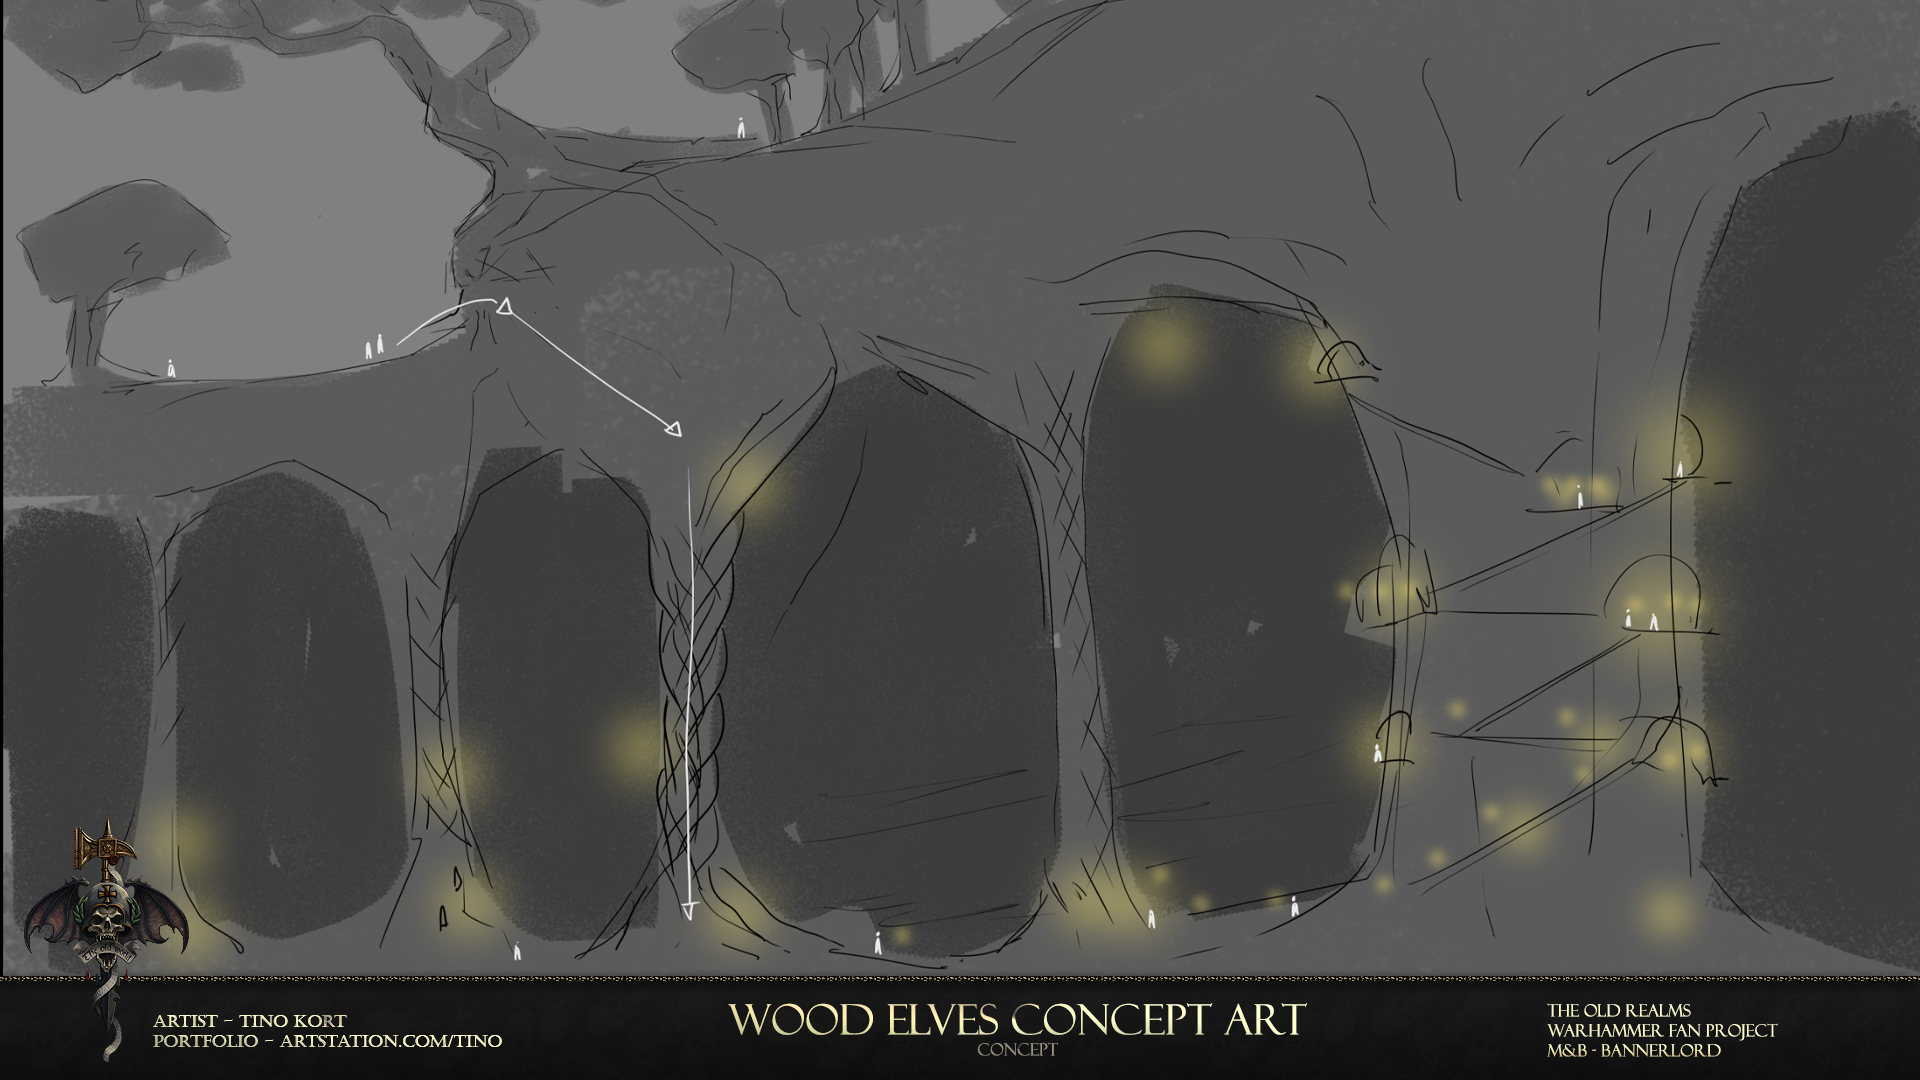 Wood elves concept art 3